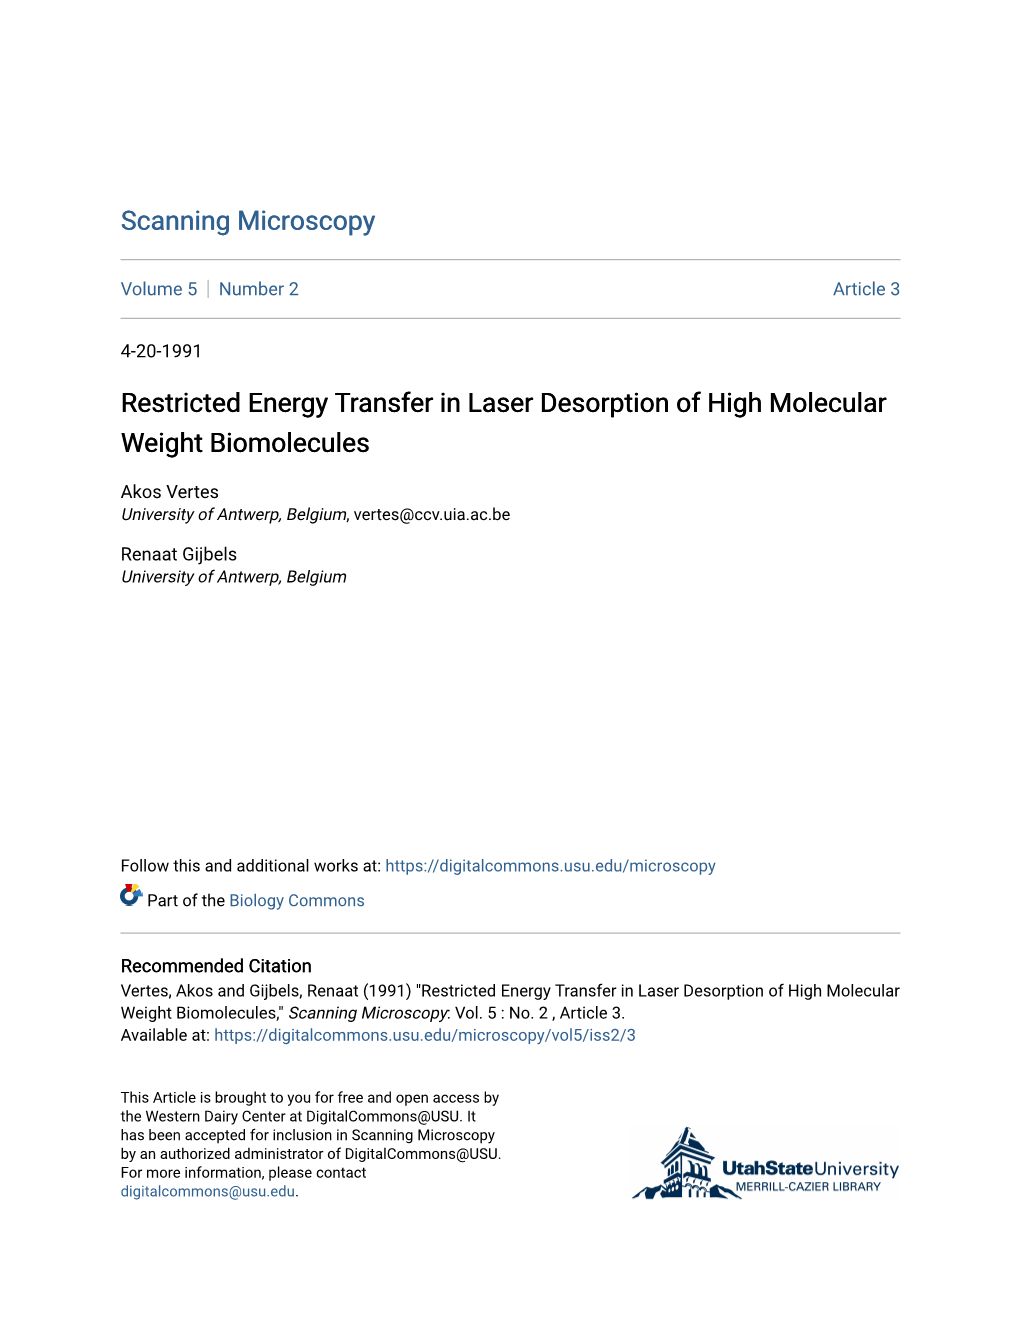 Restricted Energy Transfer in Laser Desorption of High Molecular Weight Biomolecules